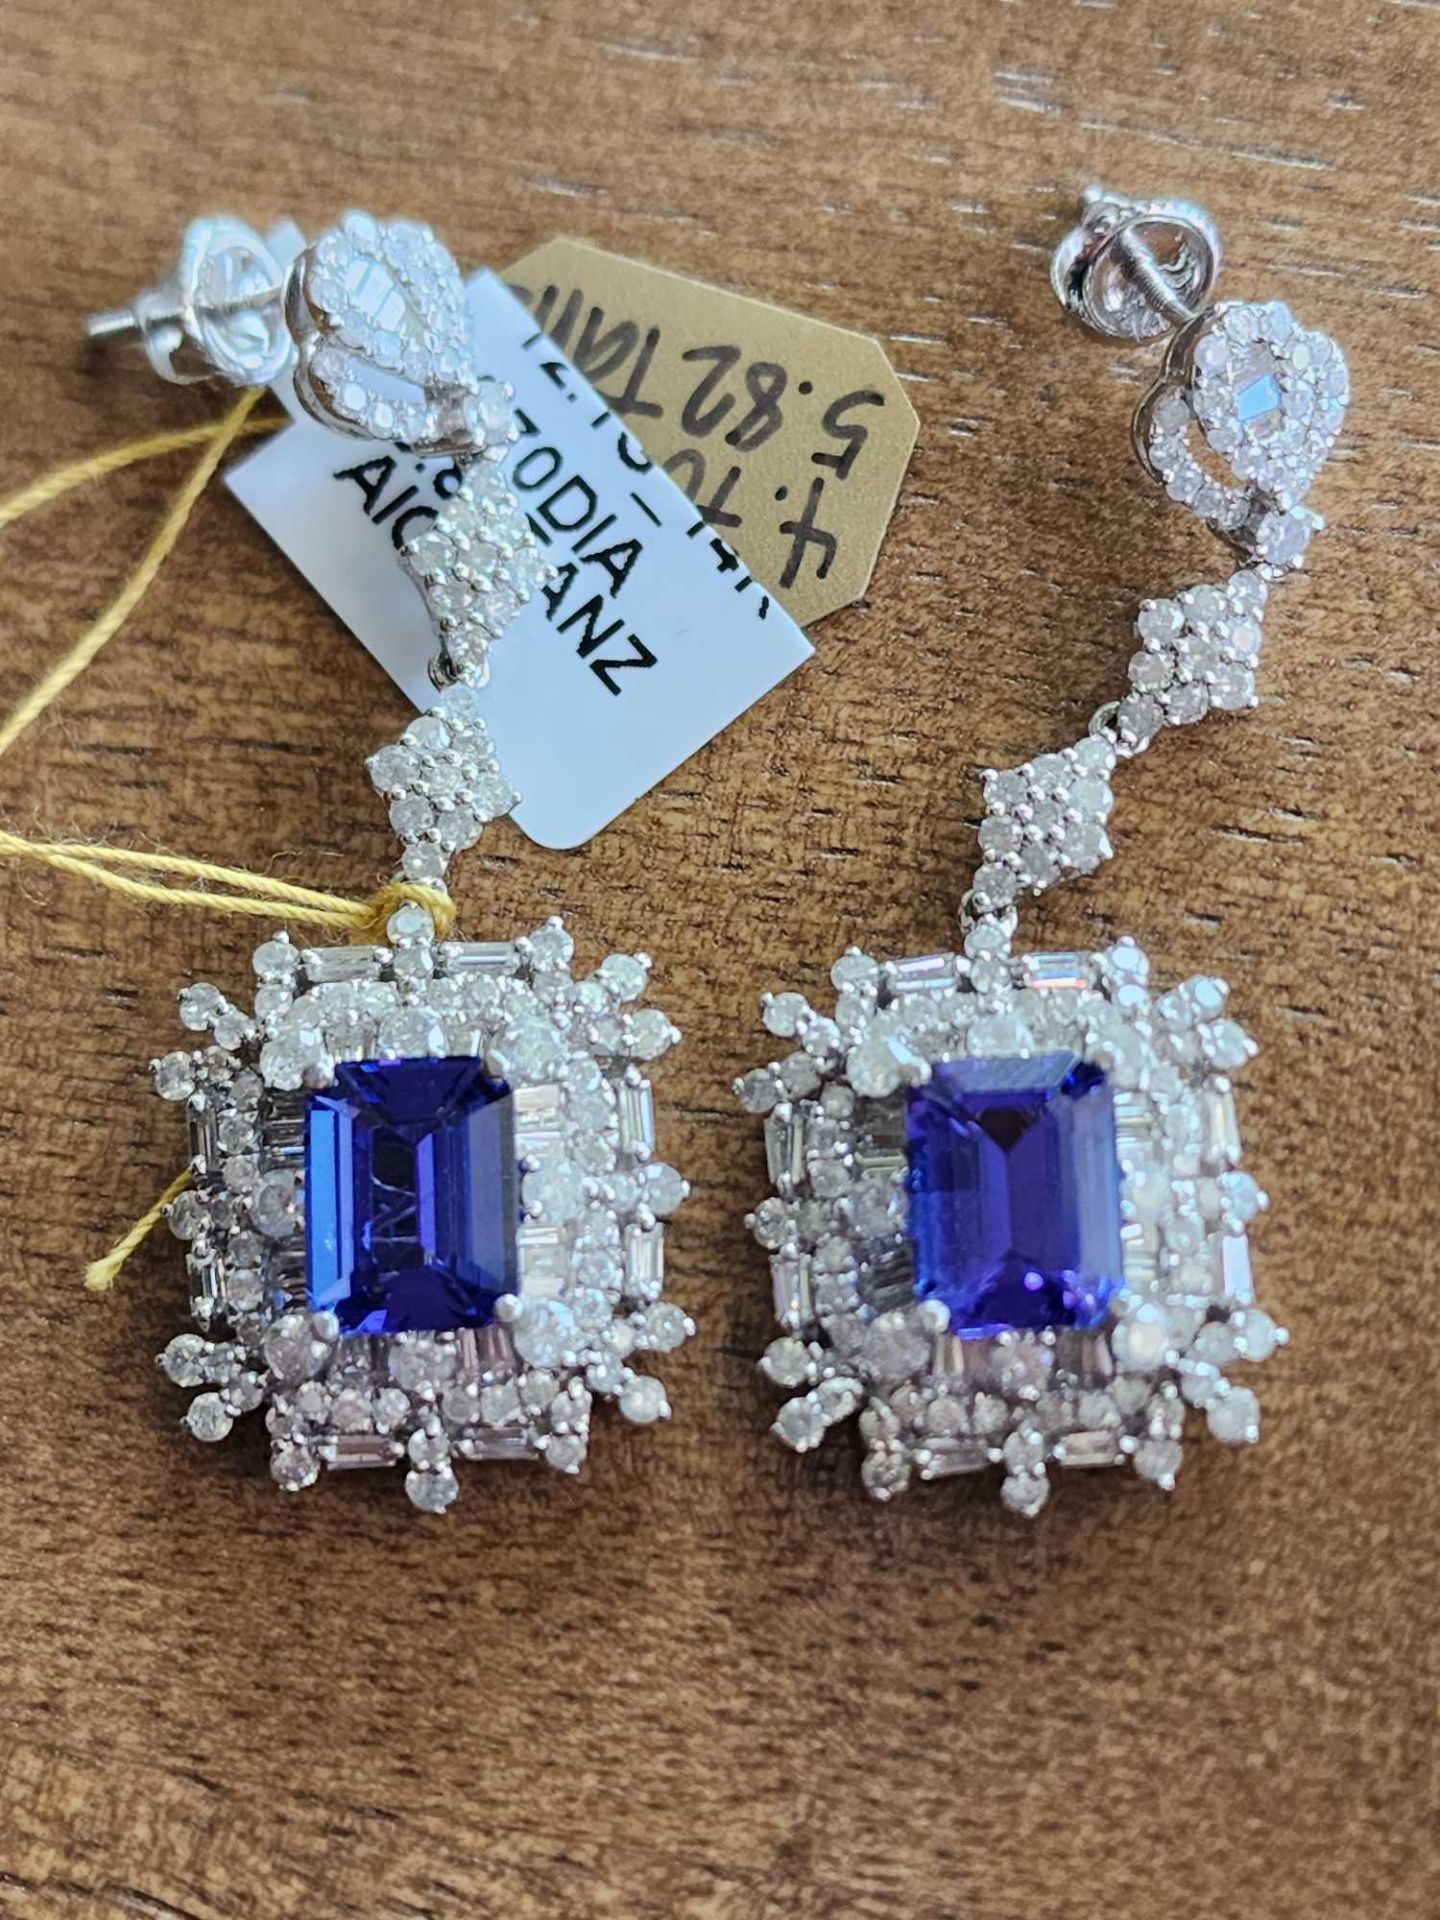 Tanzanite and Diamond Earrings, 5.82 cts tanzanite, 4.7 ctw diamonds - Image 2 of 8